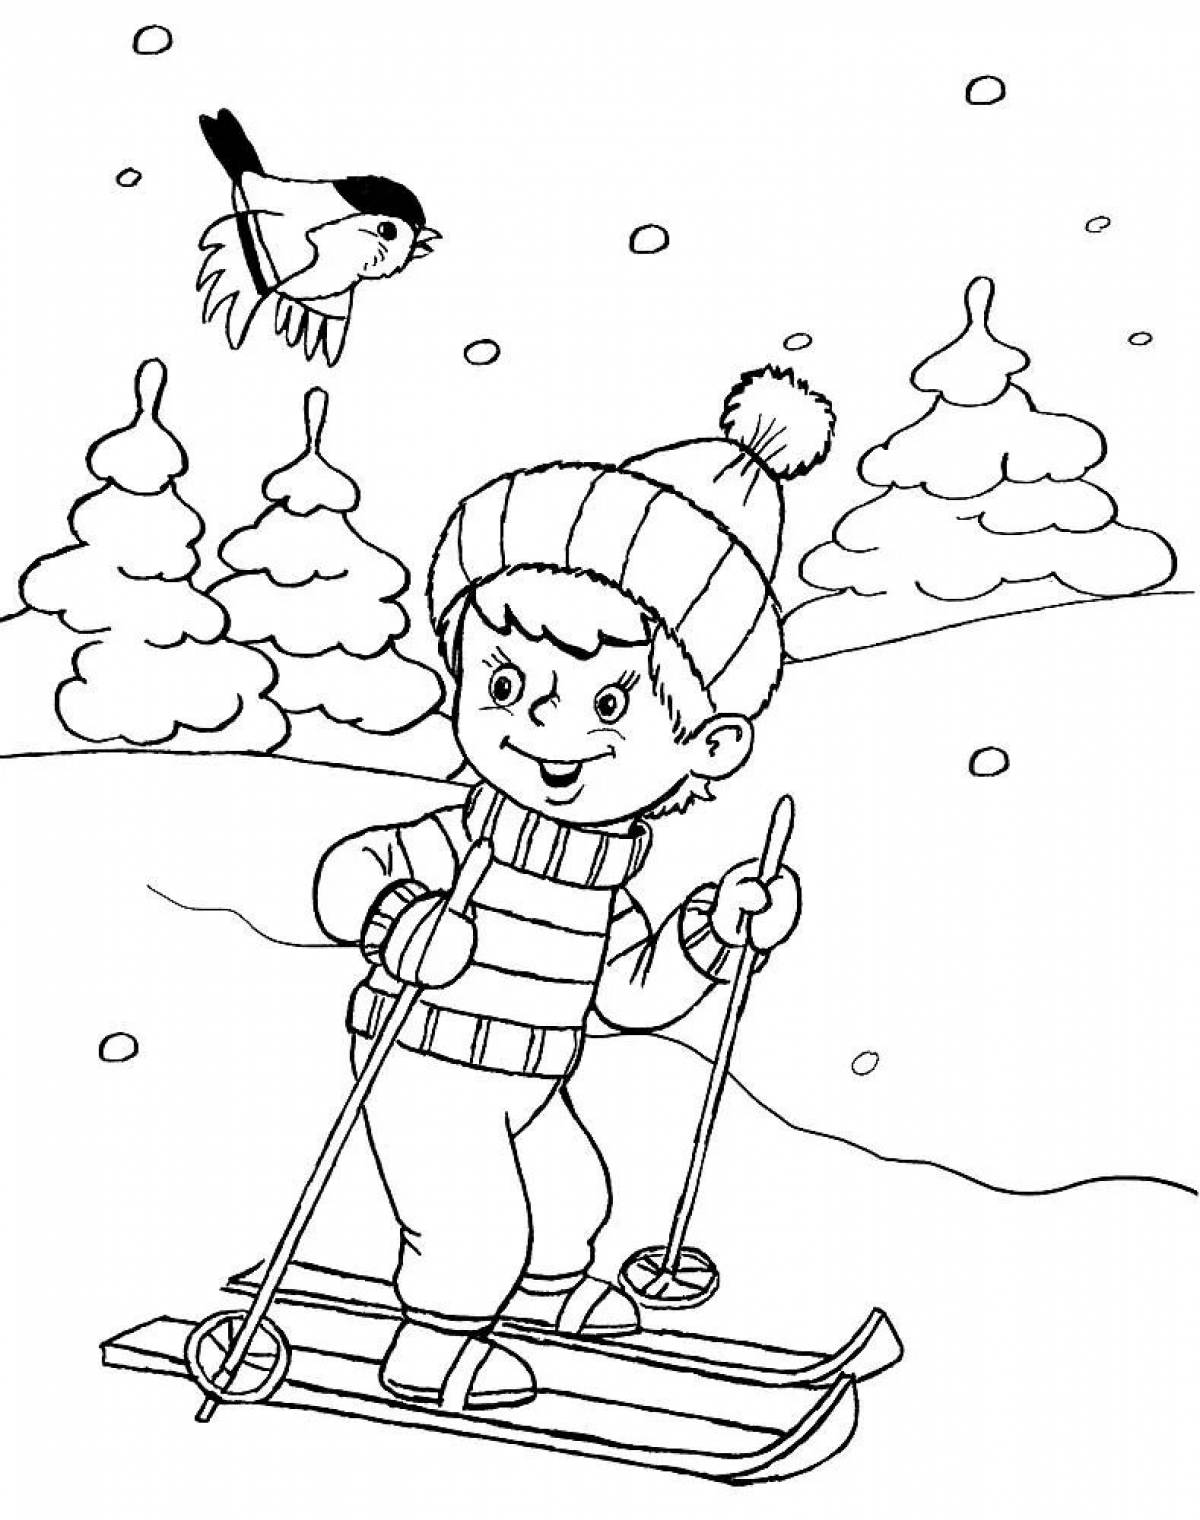 Children's fun in winter #1